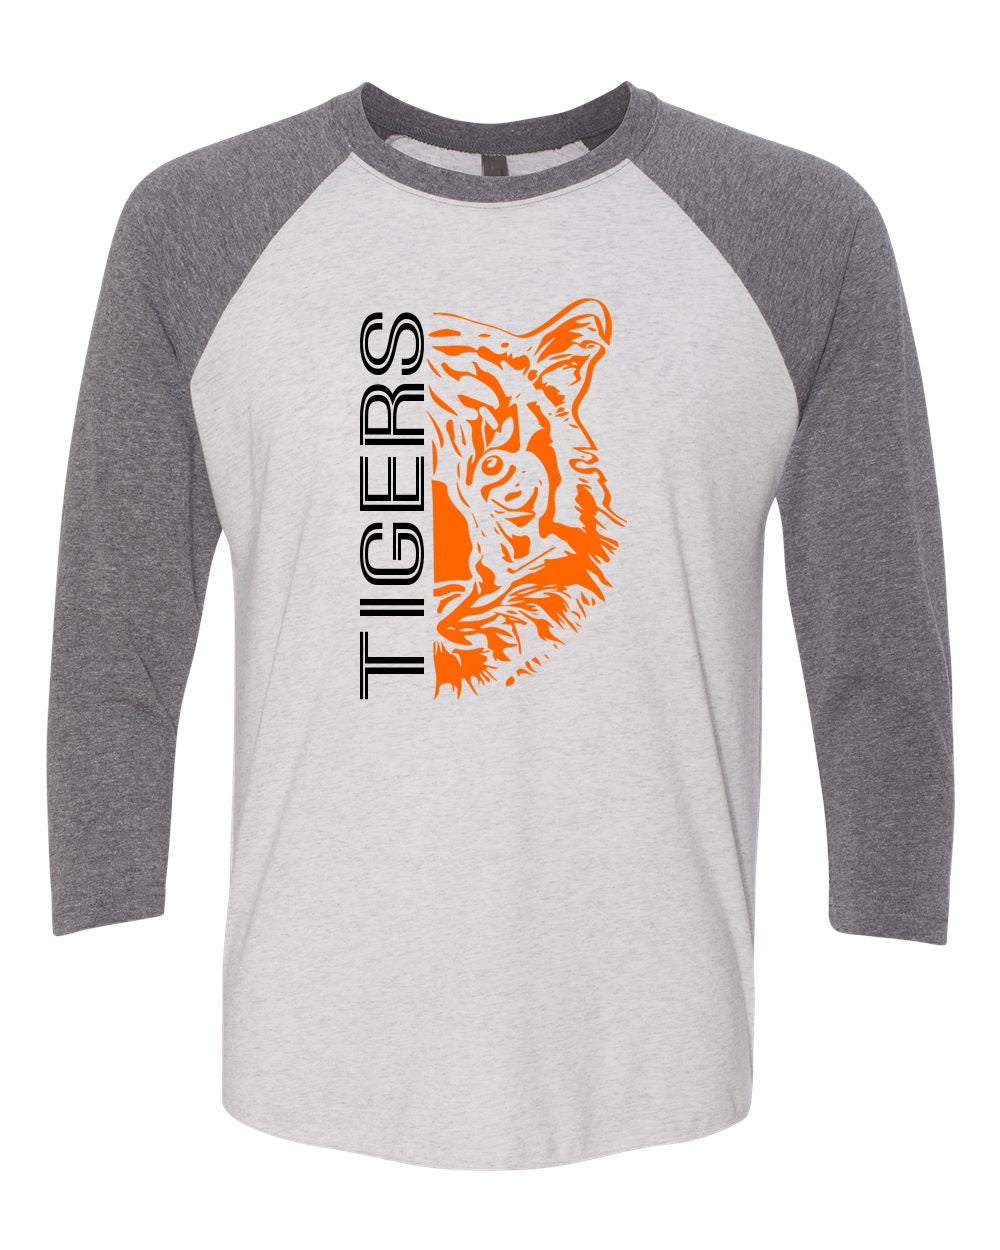 Tigers Design 6 raglan shirt